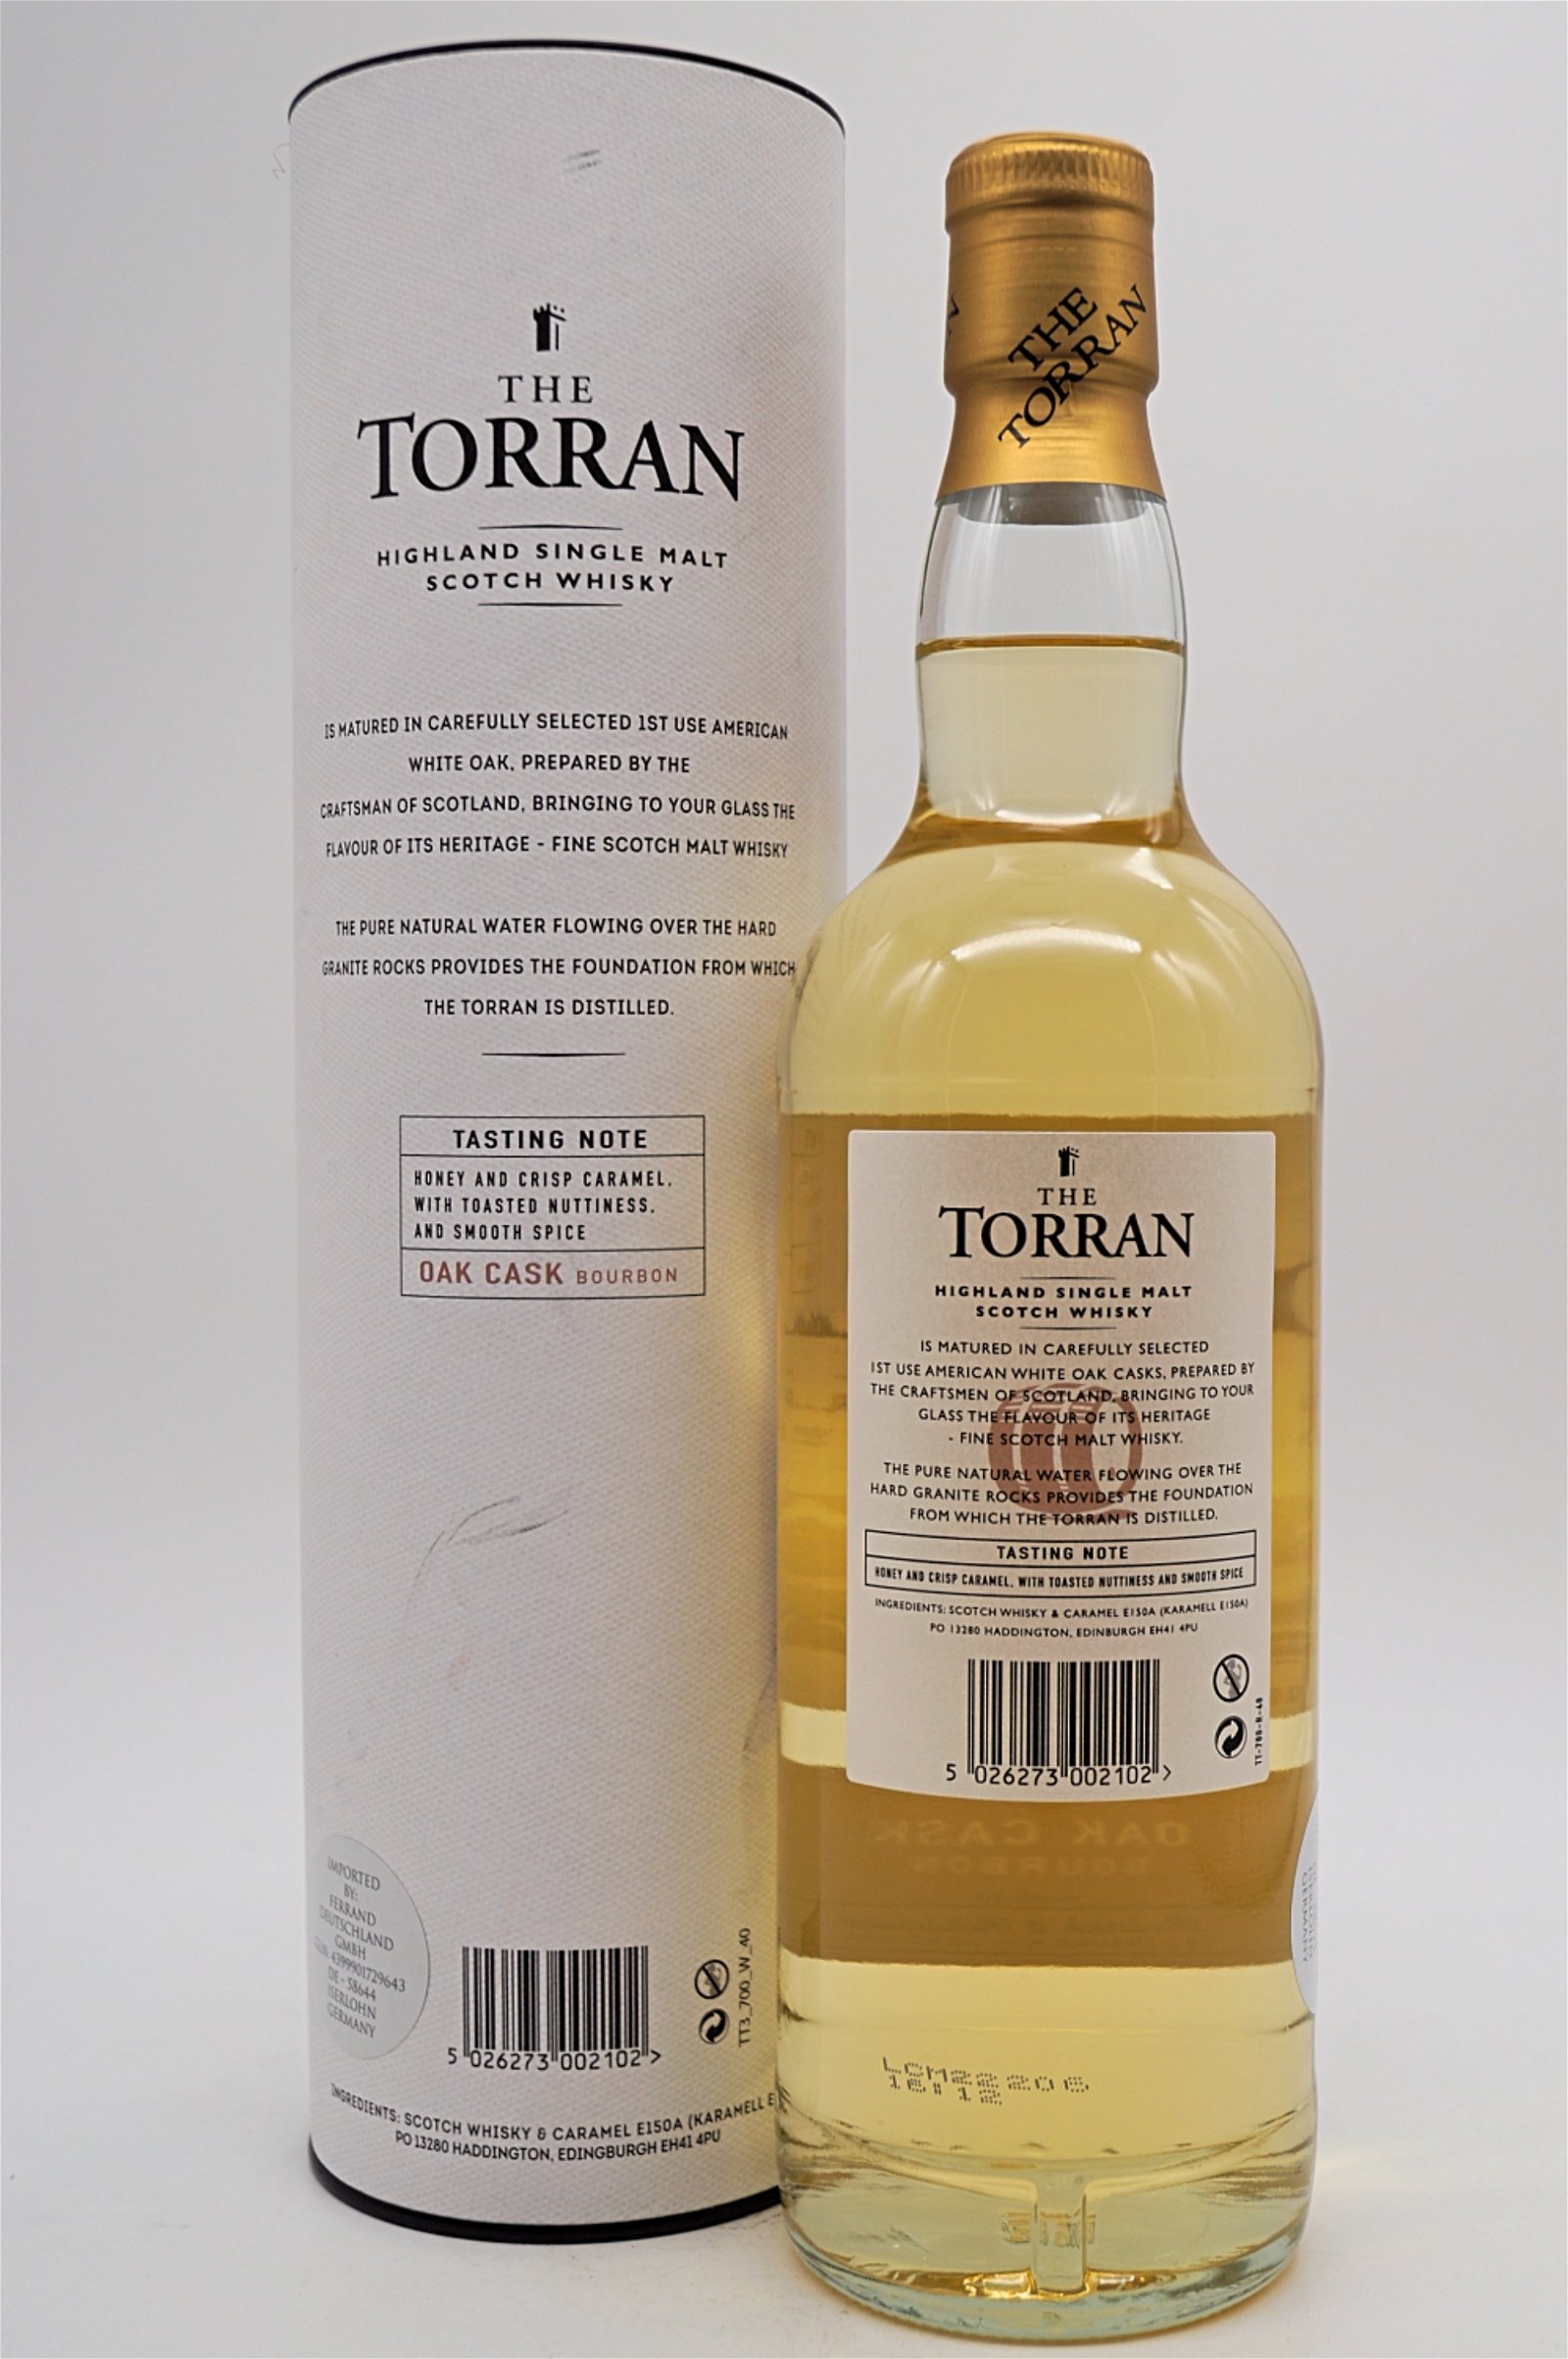 The Torran Matured in Oak Casks Highland Single Malt Scotch Whisky